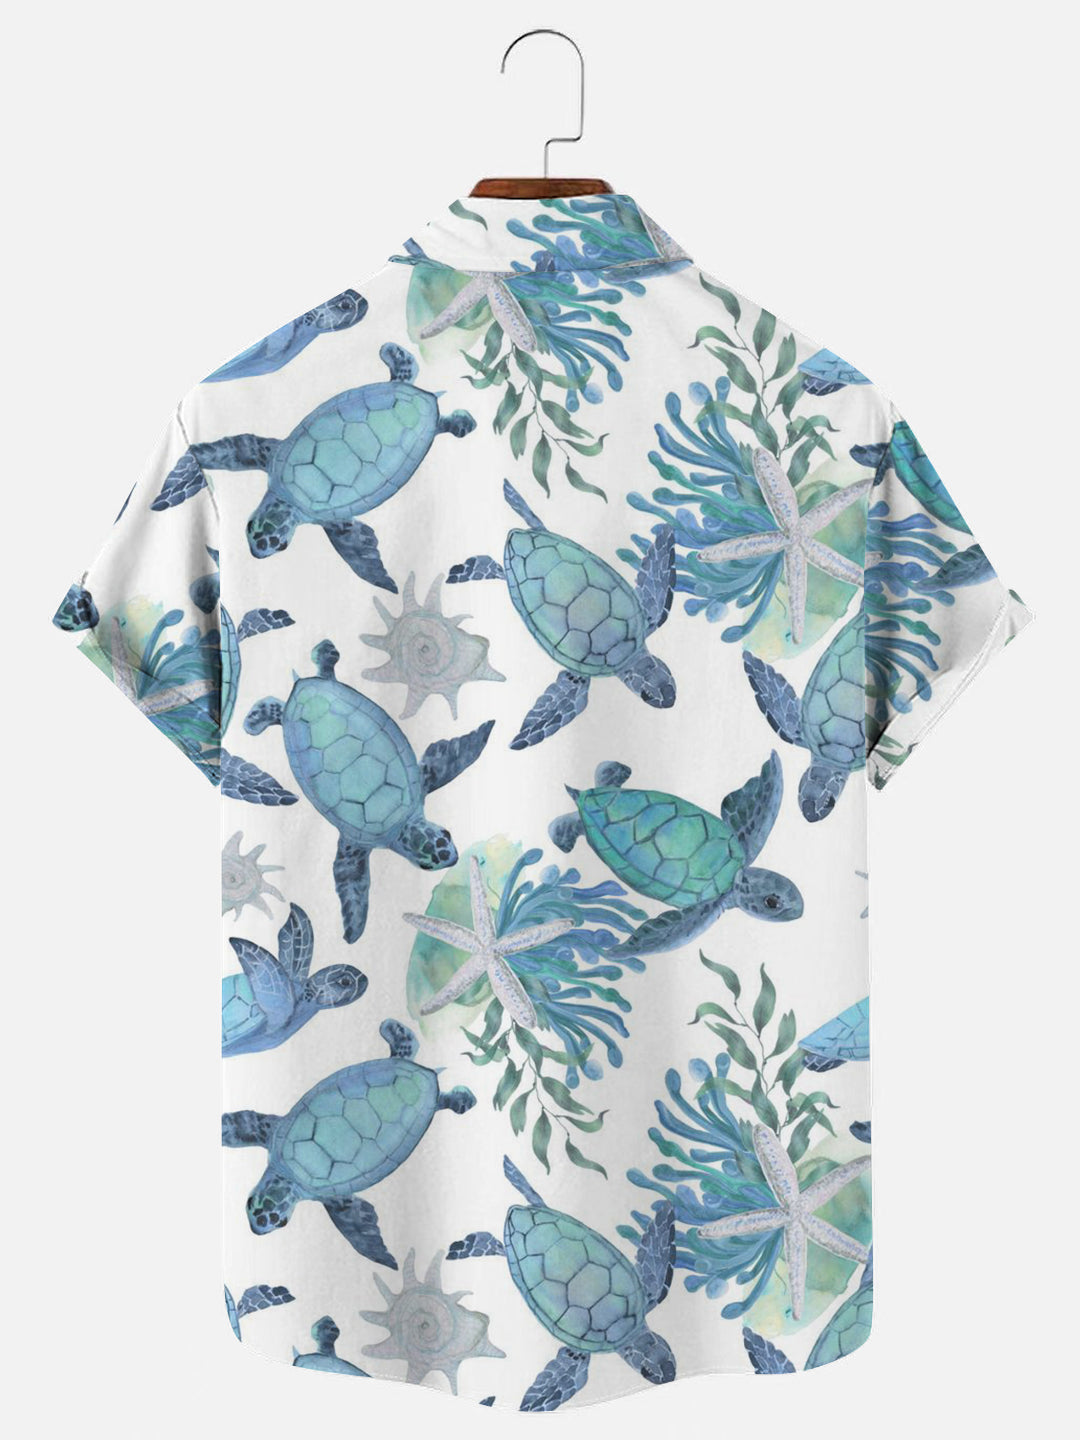 Men's Turtle Print Hawaiian Casual Breathable Short Sleeve Shirt